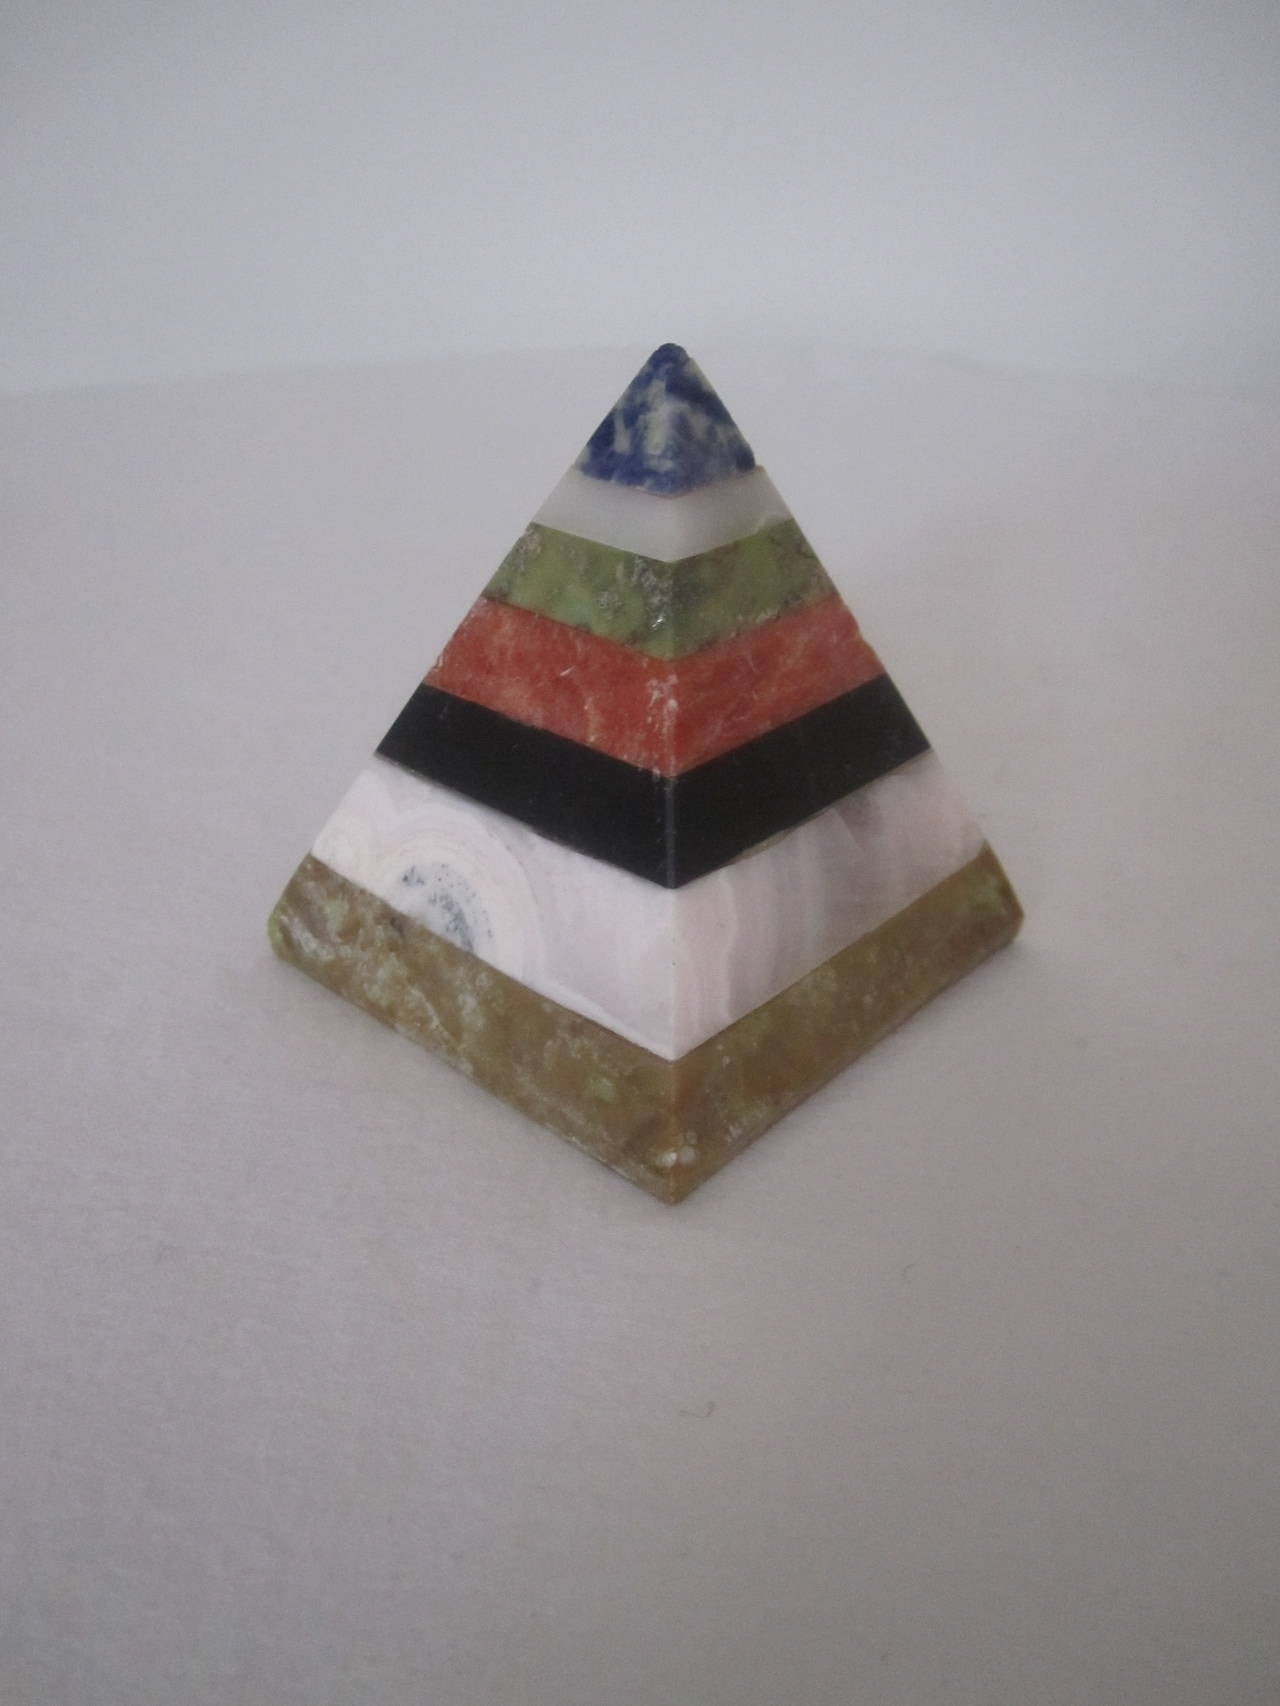 20th Century Multi-Stone Pyramid including Lapis and Black Onyx